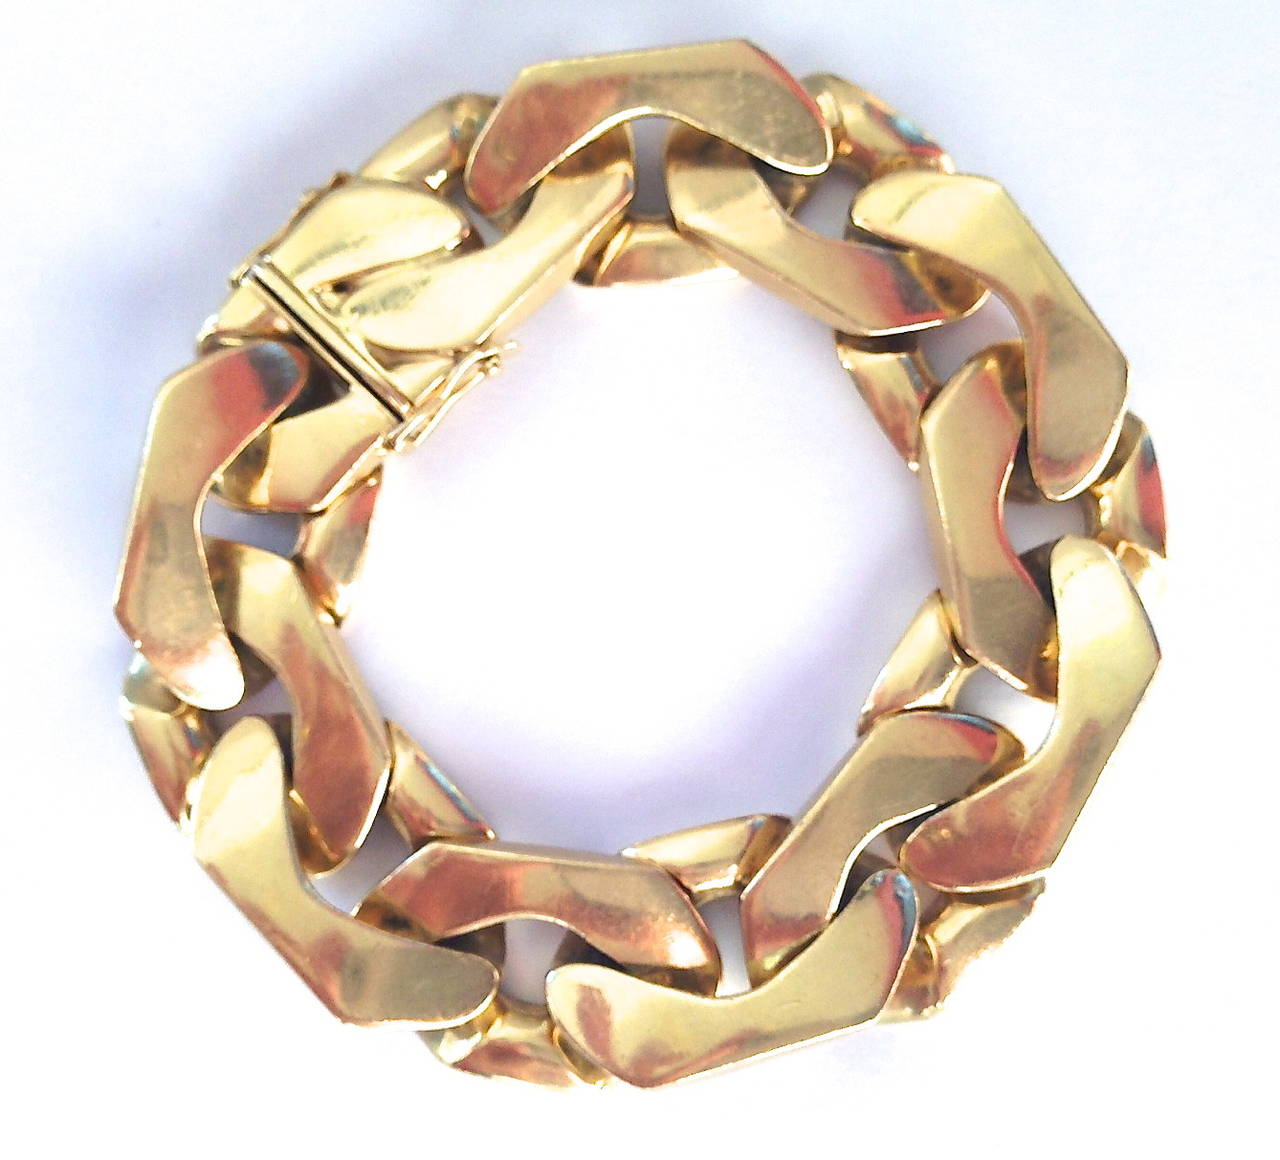 A handsome gold curb link bracelet by Cartier. A 7